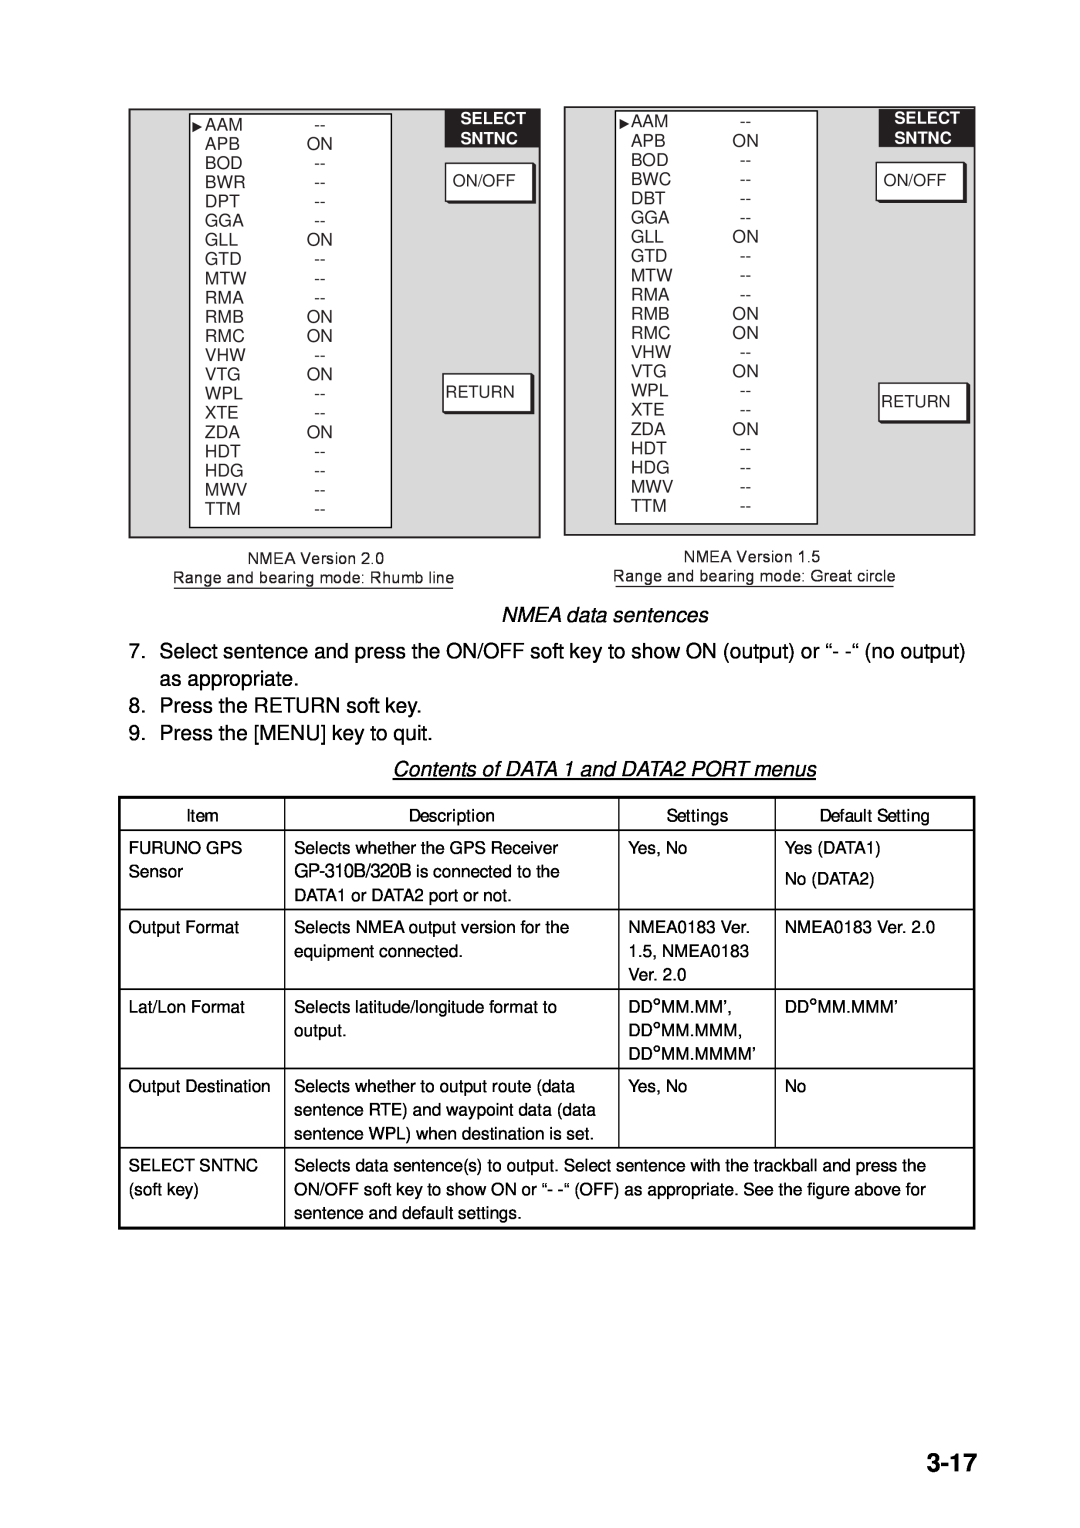 Furuno 1943C, 1933C, 1833C, 1823C, GD-1900C, 1953C manual 3-17, NMEA data sentences, Contents of DATA 1 and DATA2 PORT menus 